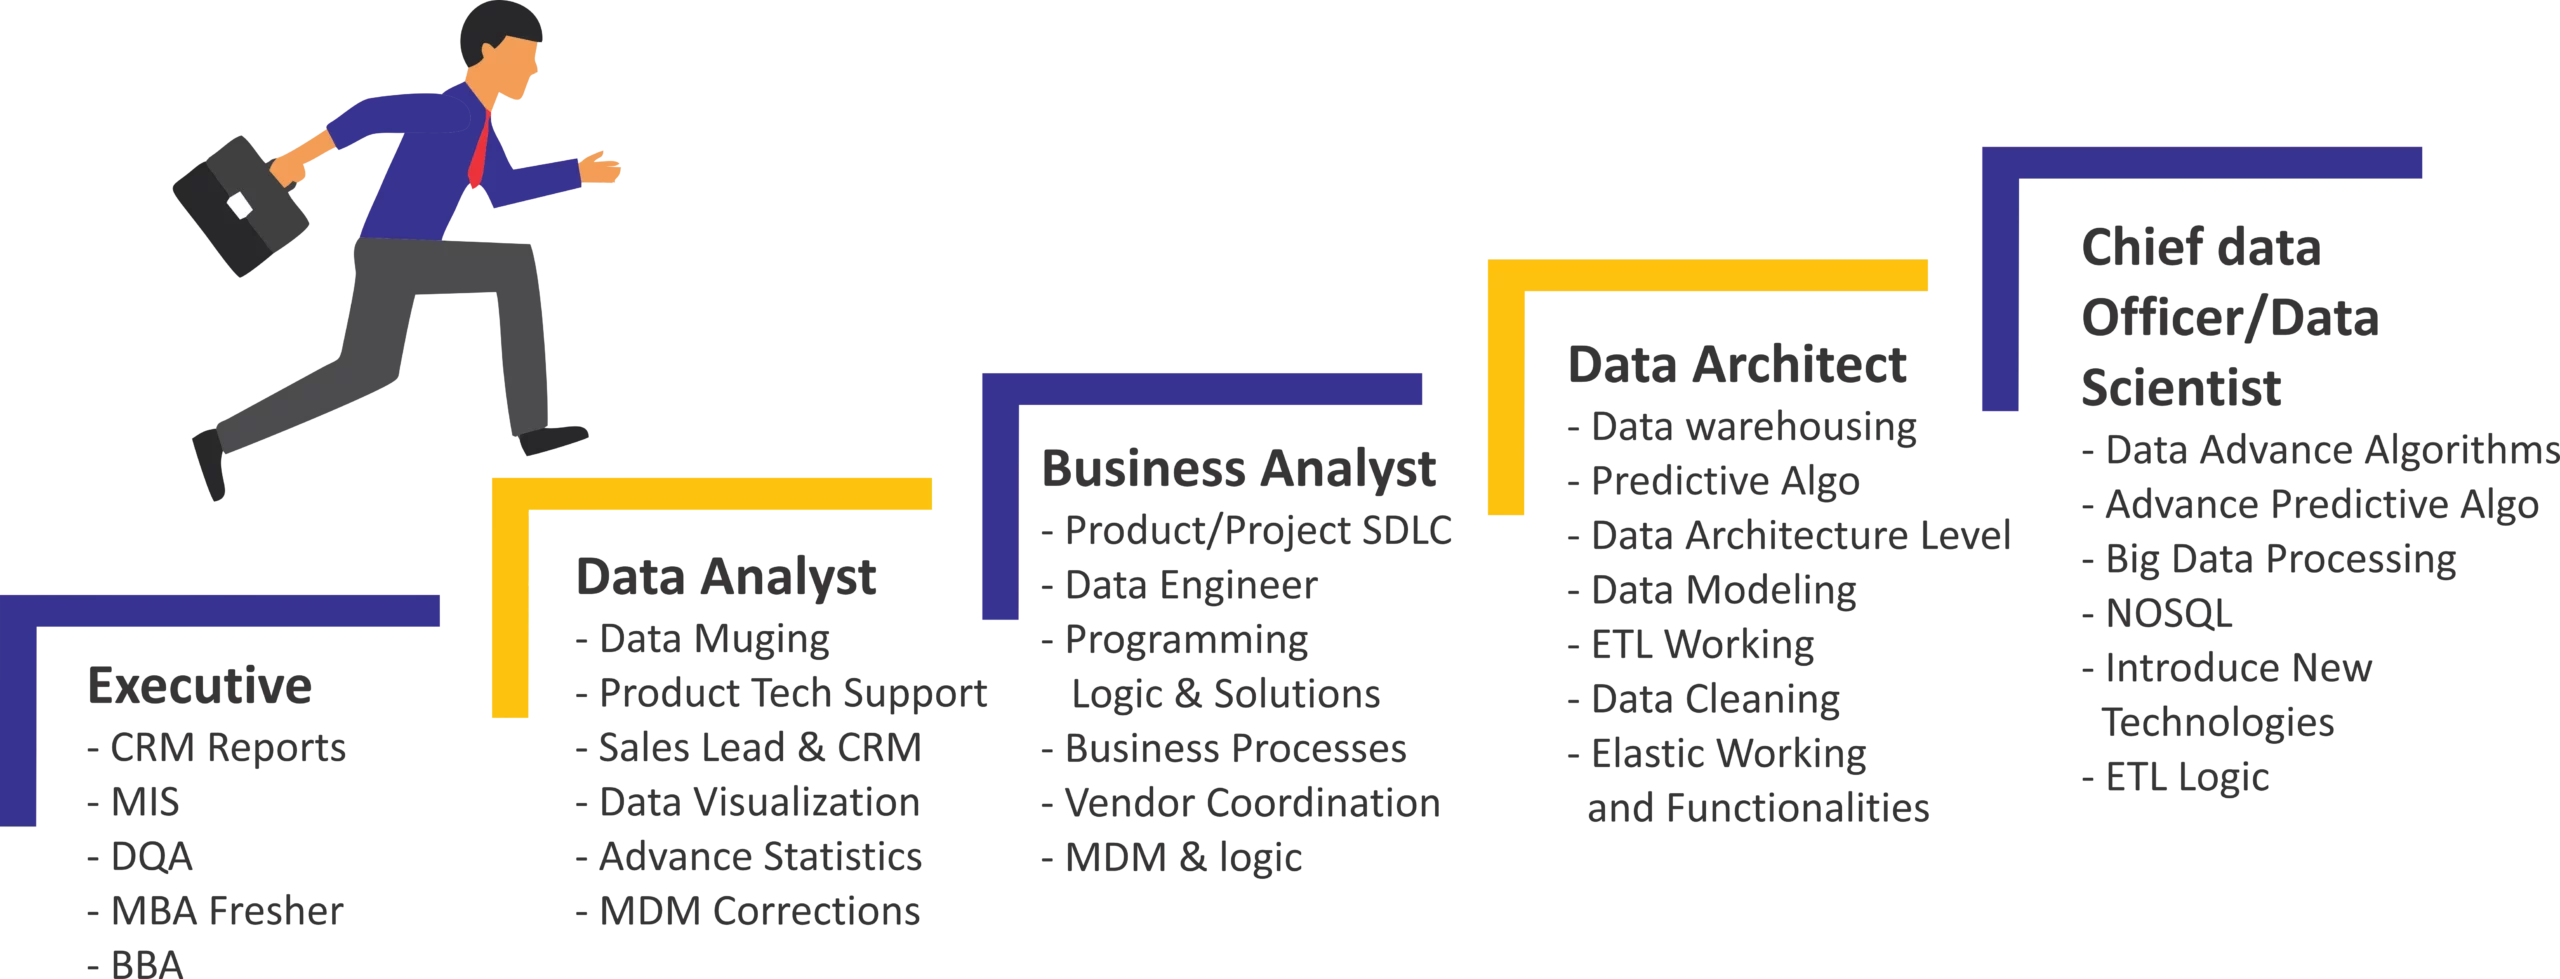 data science career path